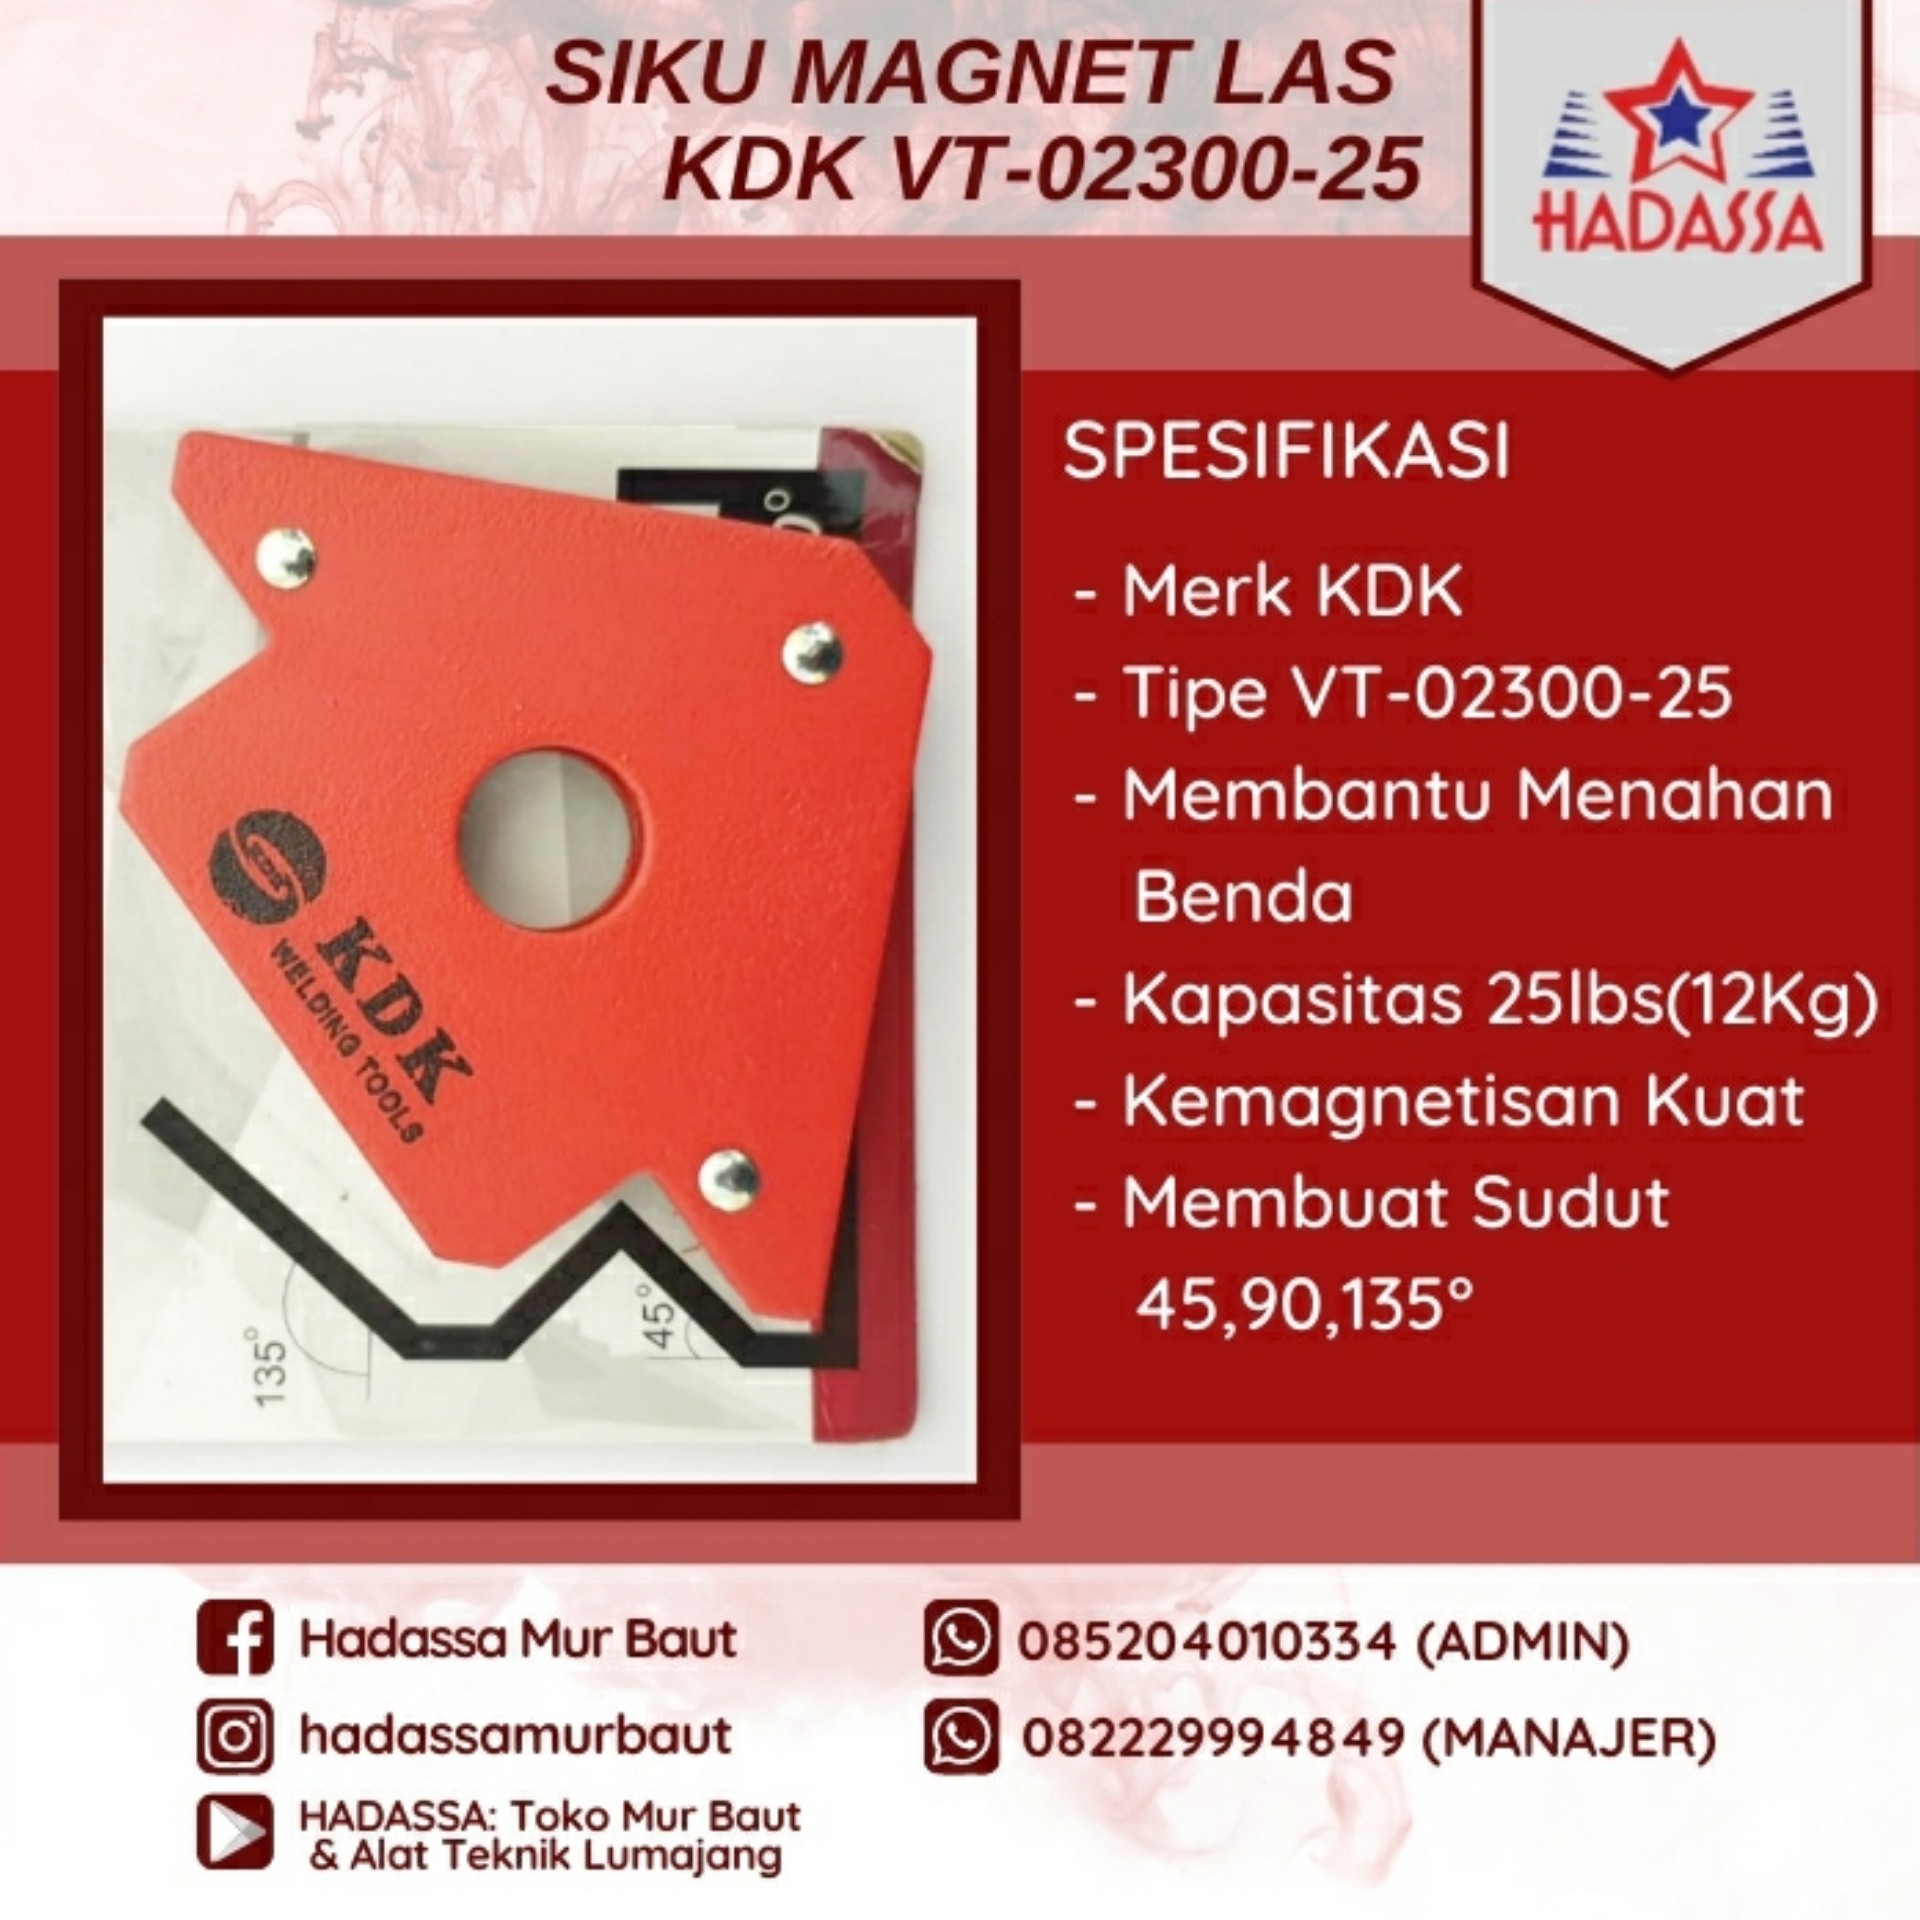 Siku Magnet Las KDK VT-02300-25